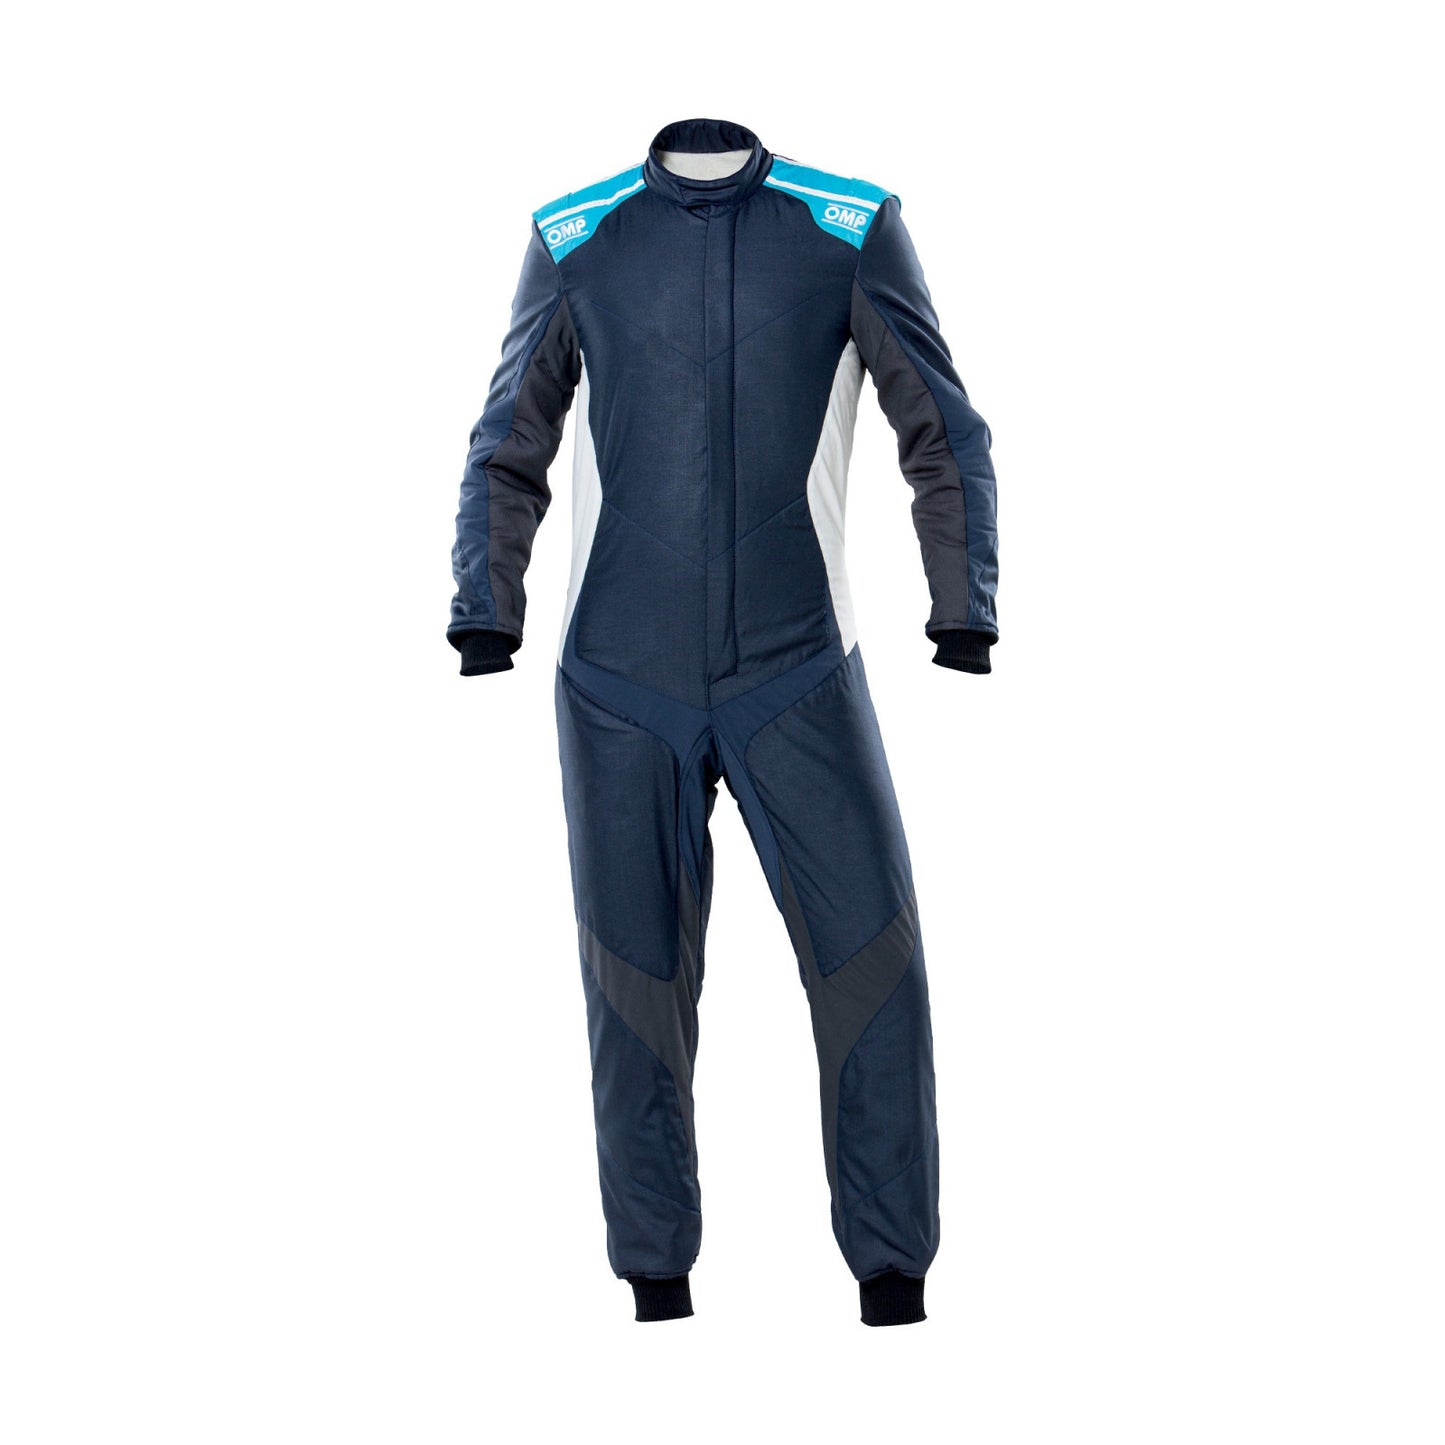 OMP One Evo X Racing Suit Blue/Cyan Size 54 IA0186124454